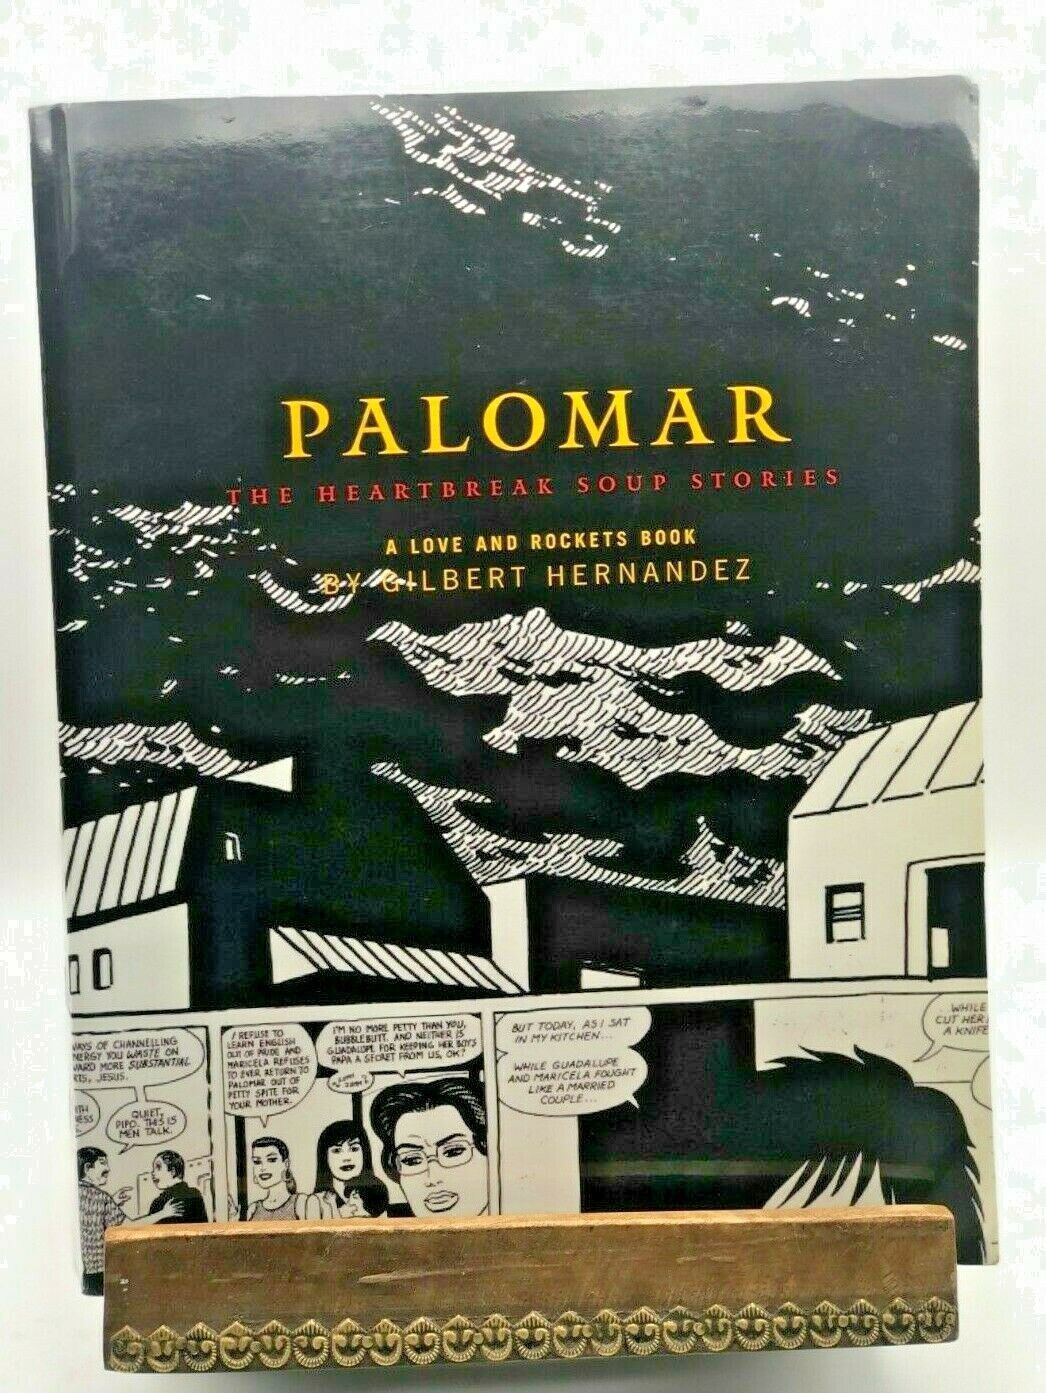 Palomar The Heartbreak Soup Stories 💥A Love & Rockets Book by Gilbert Hernandez